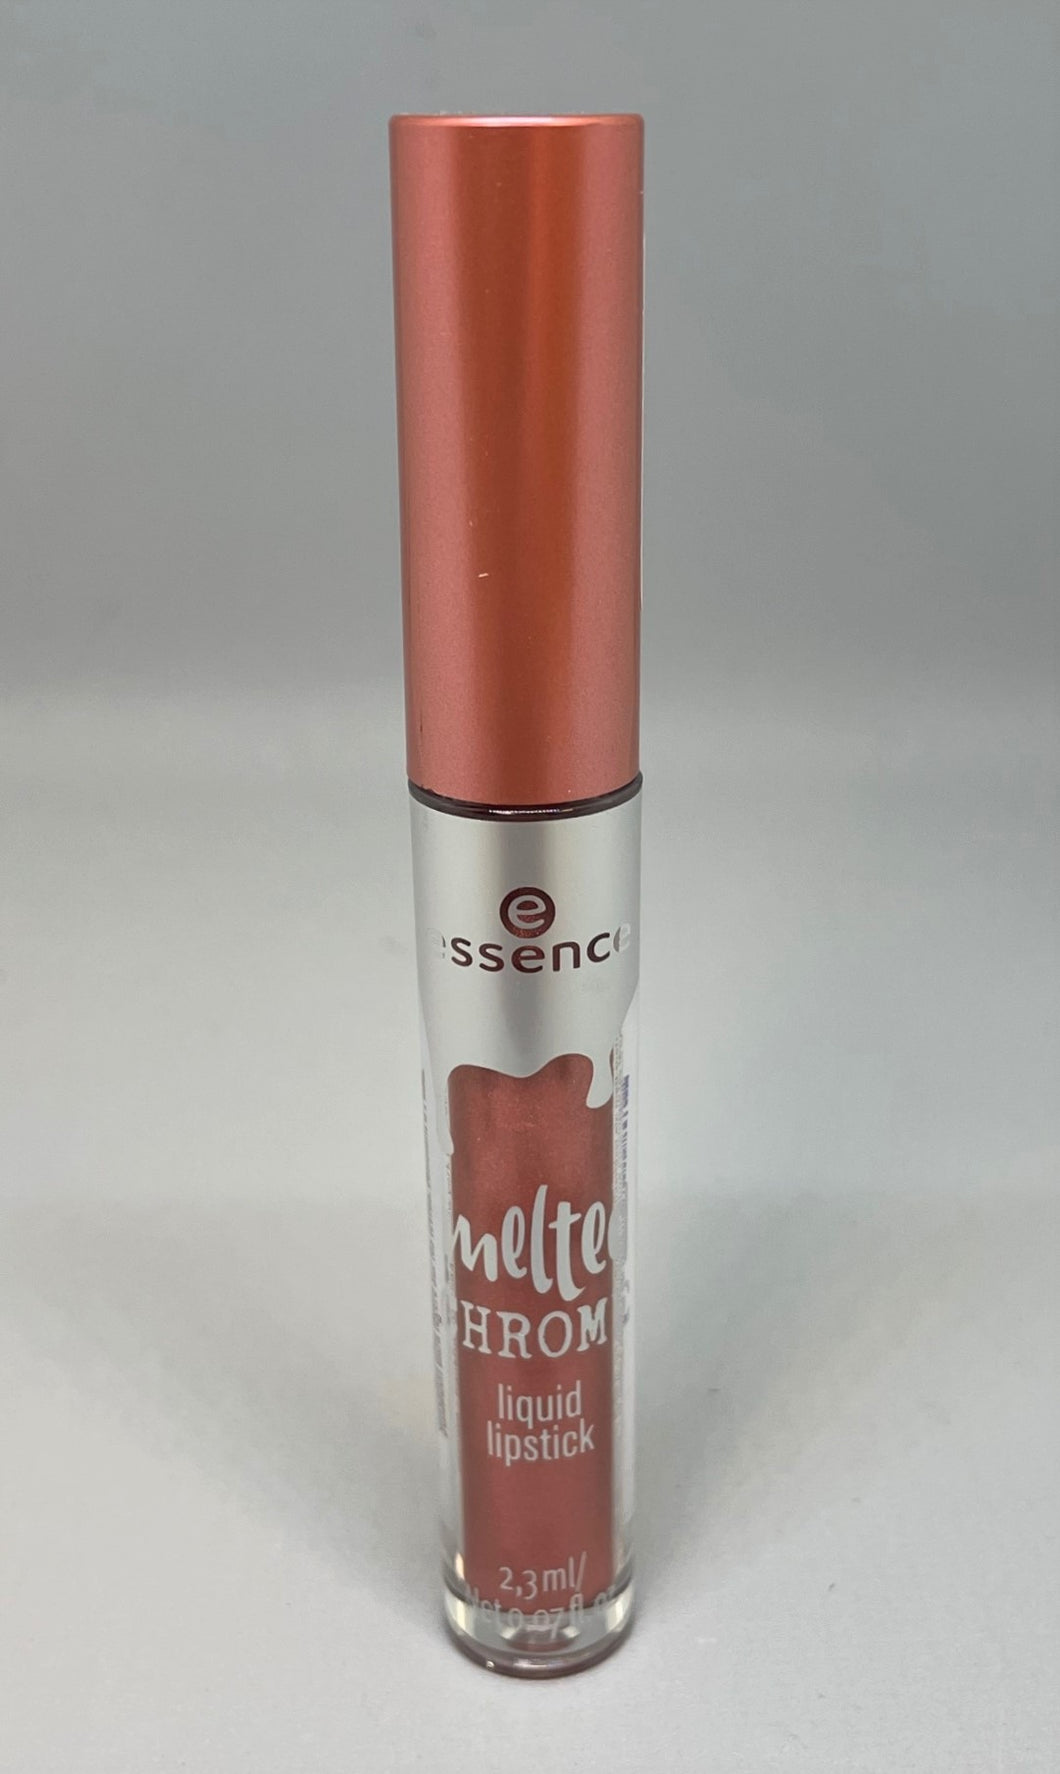 Essence Melted Chrome Liquid Lipstick - 2.3 mL - 03 Copper Dropper - New